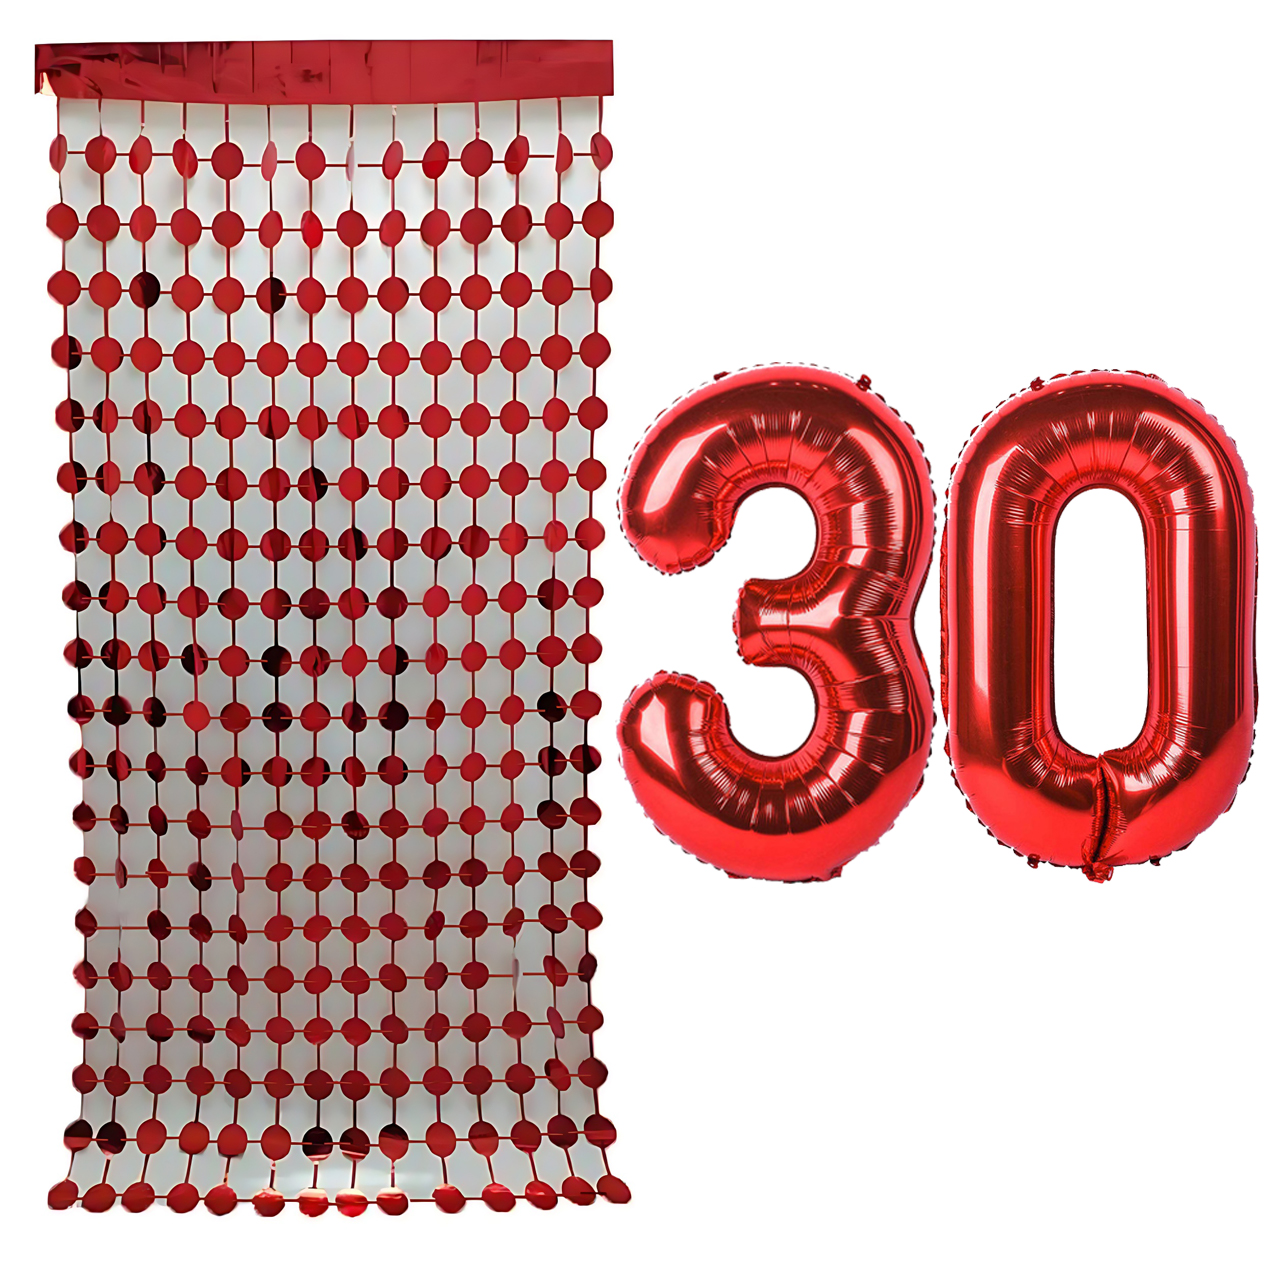 بادکنک فویلی مستر تم طرح عدد 30 به همراه ریسه تزئینی بسته 3 عددی